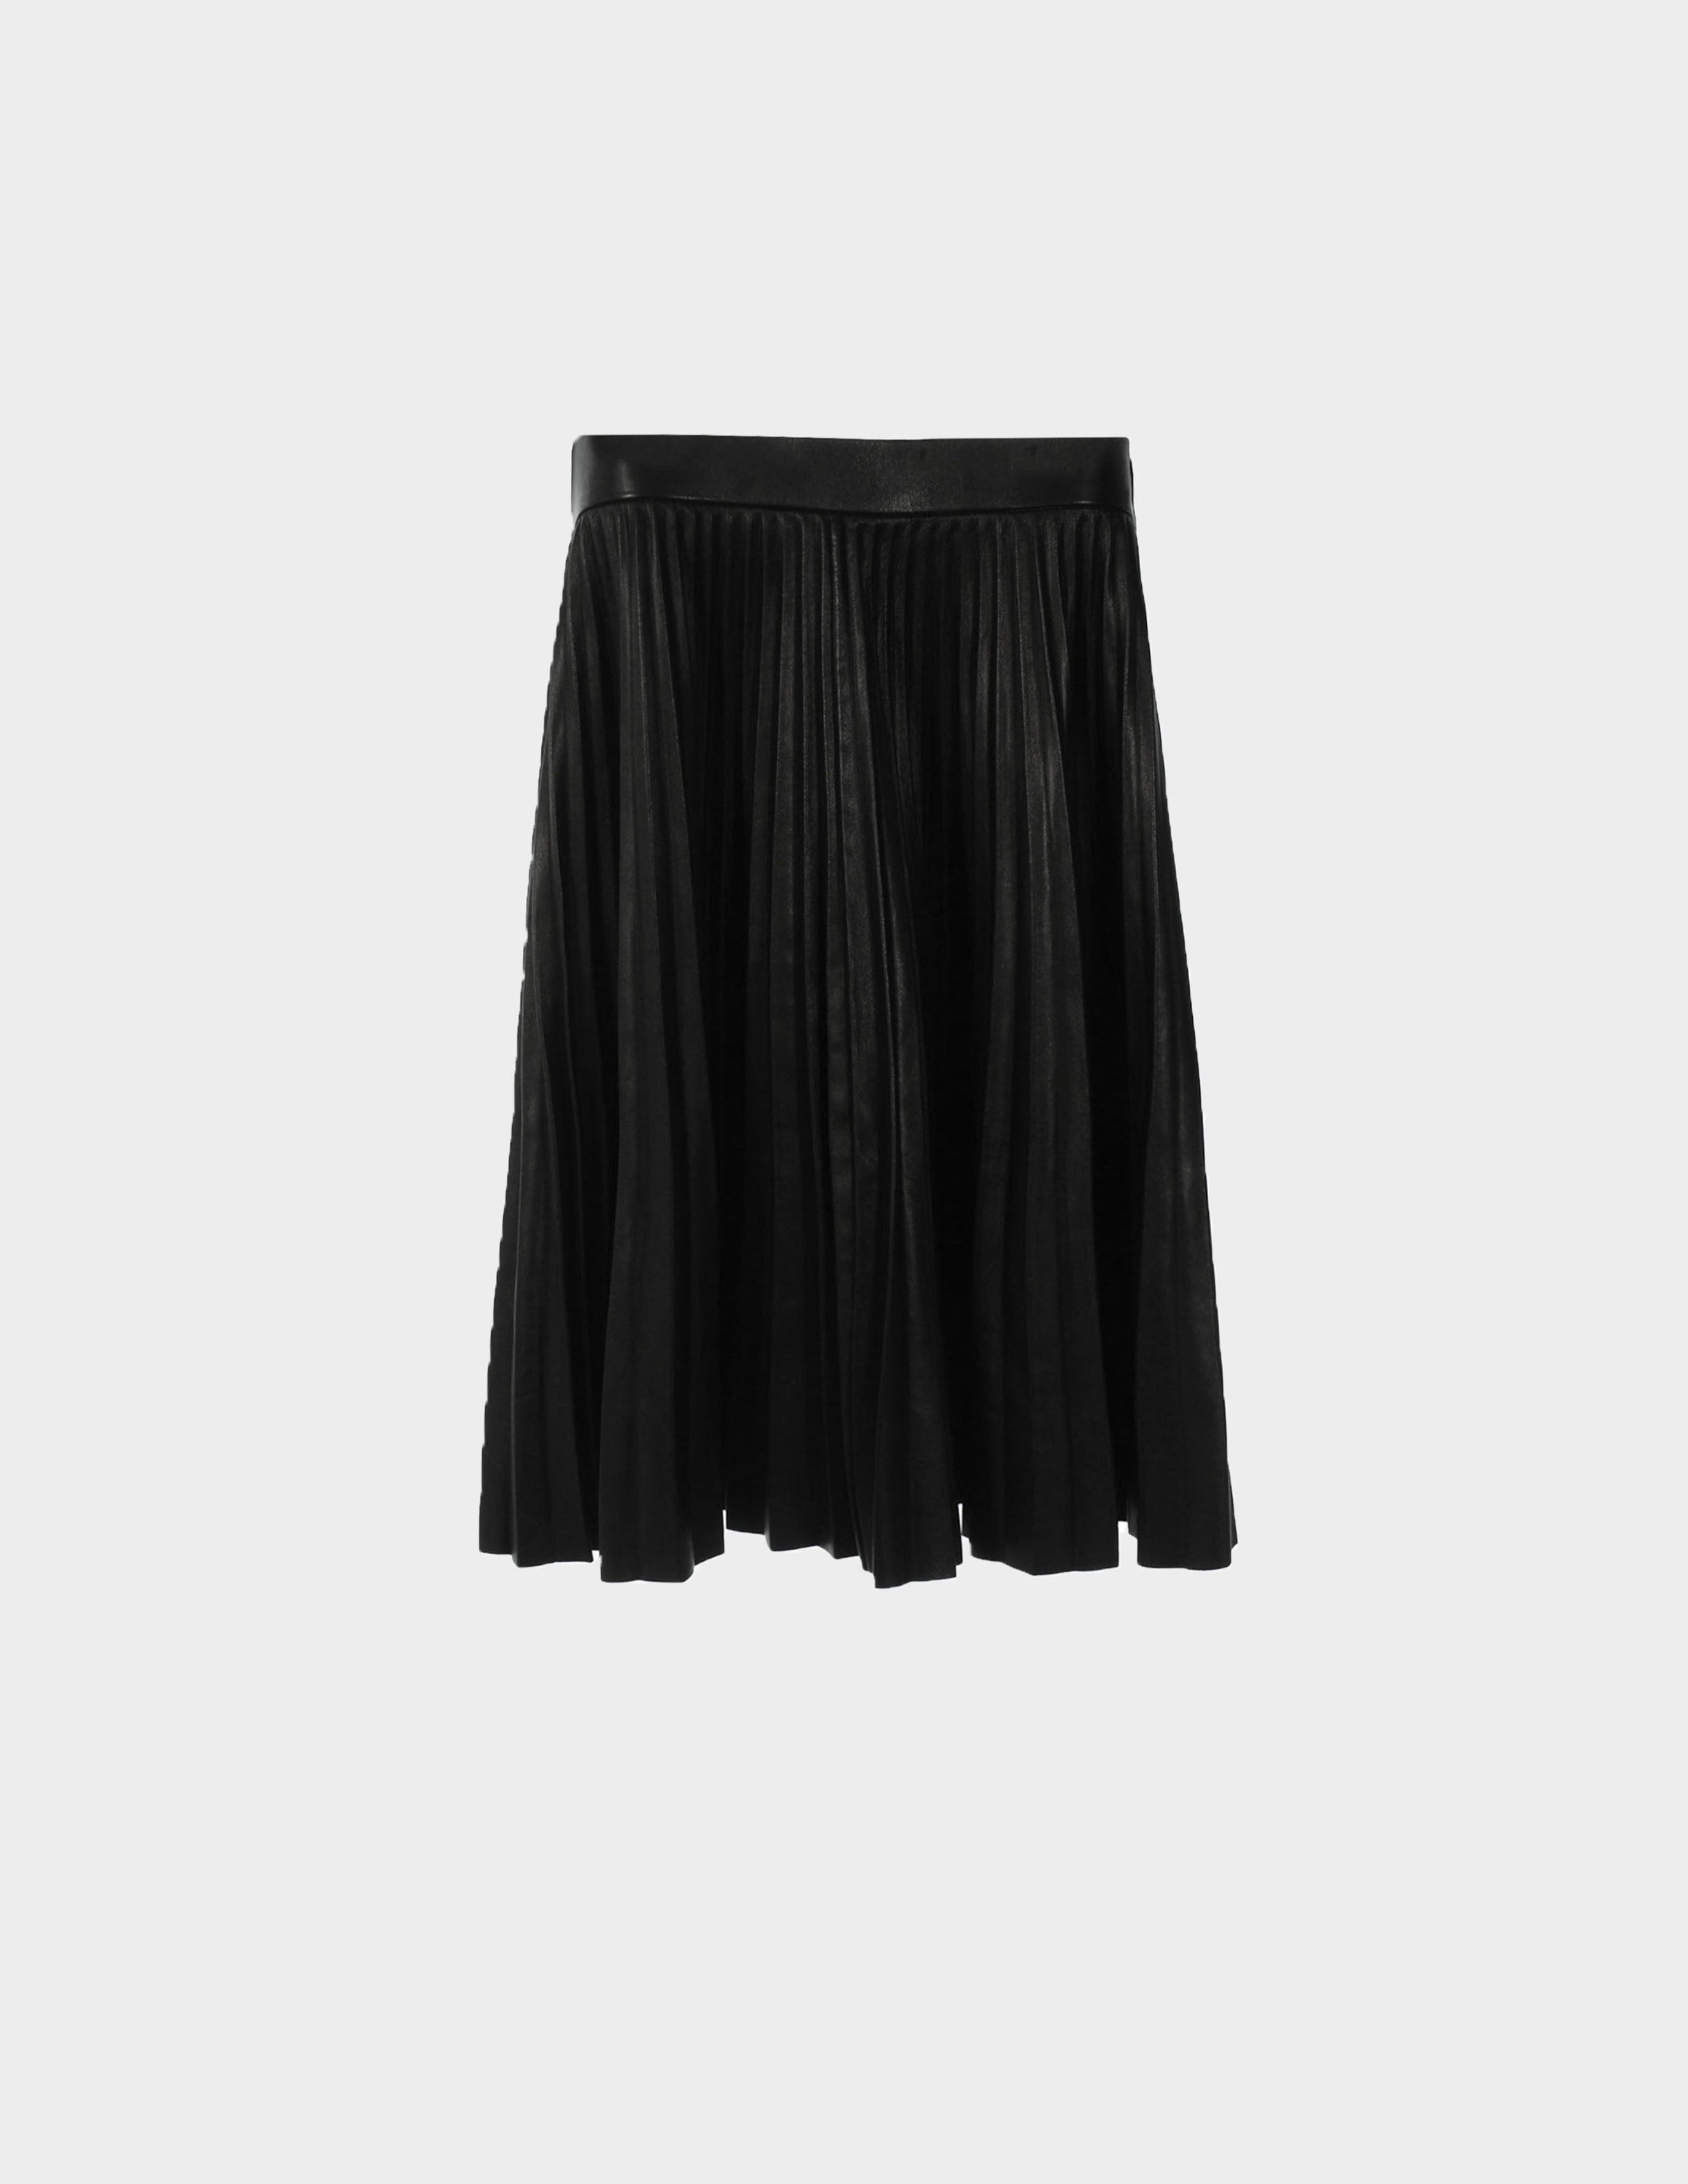 Céline by Phoebe Philo 2010s Black Pleated Leather Skirt